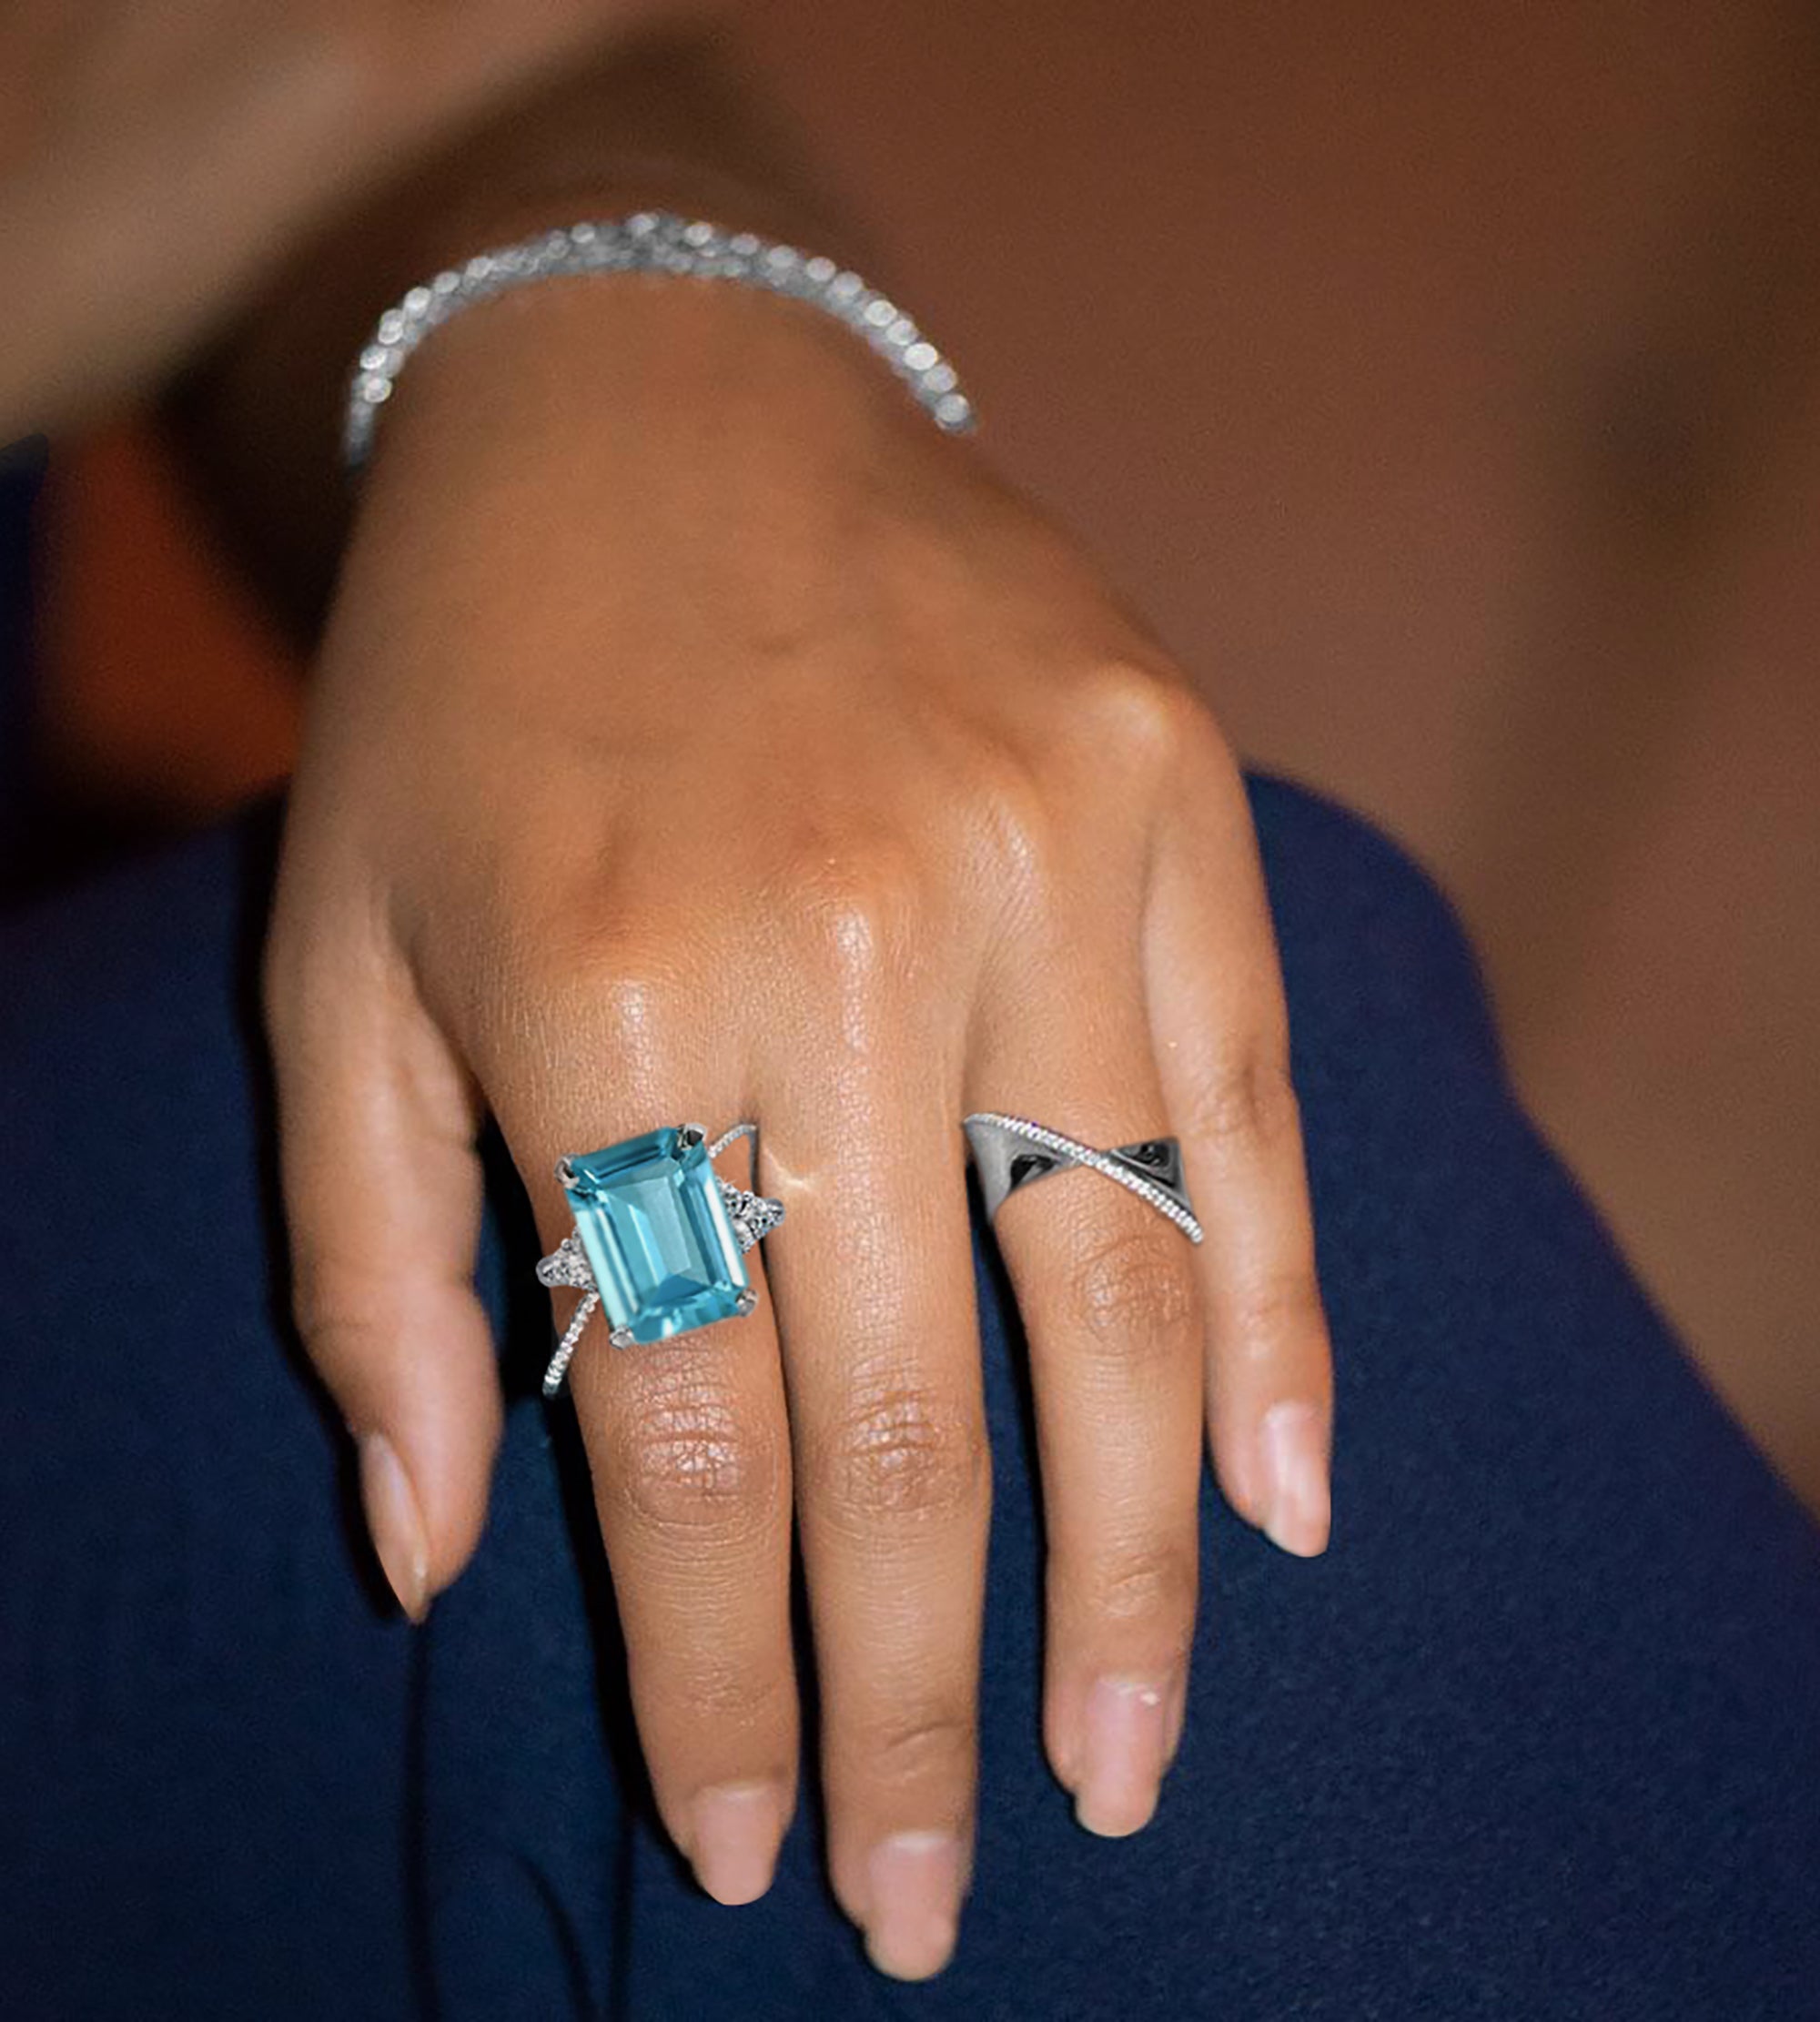 Two Tier Diamond and Emerald Cocktail Ring - Bopies Diamonds & Fine Jewelry